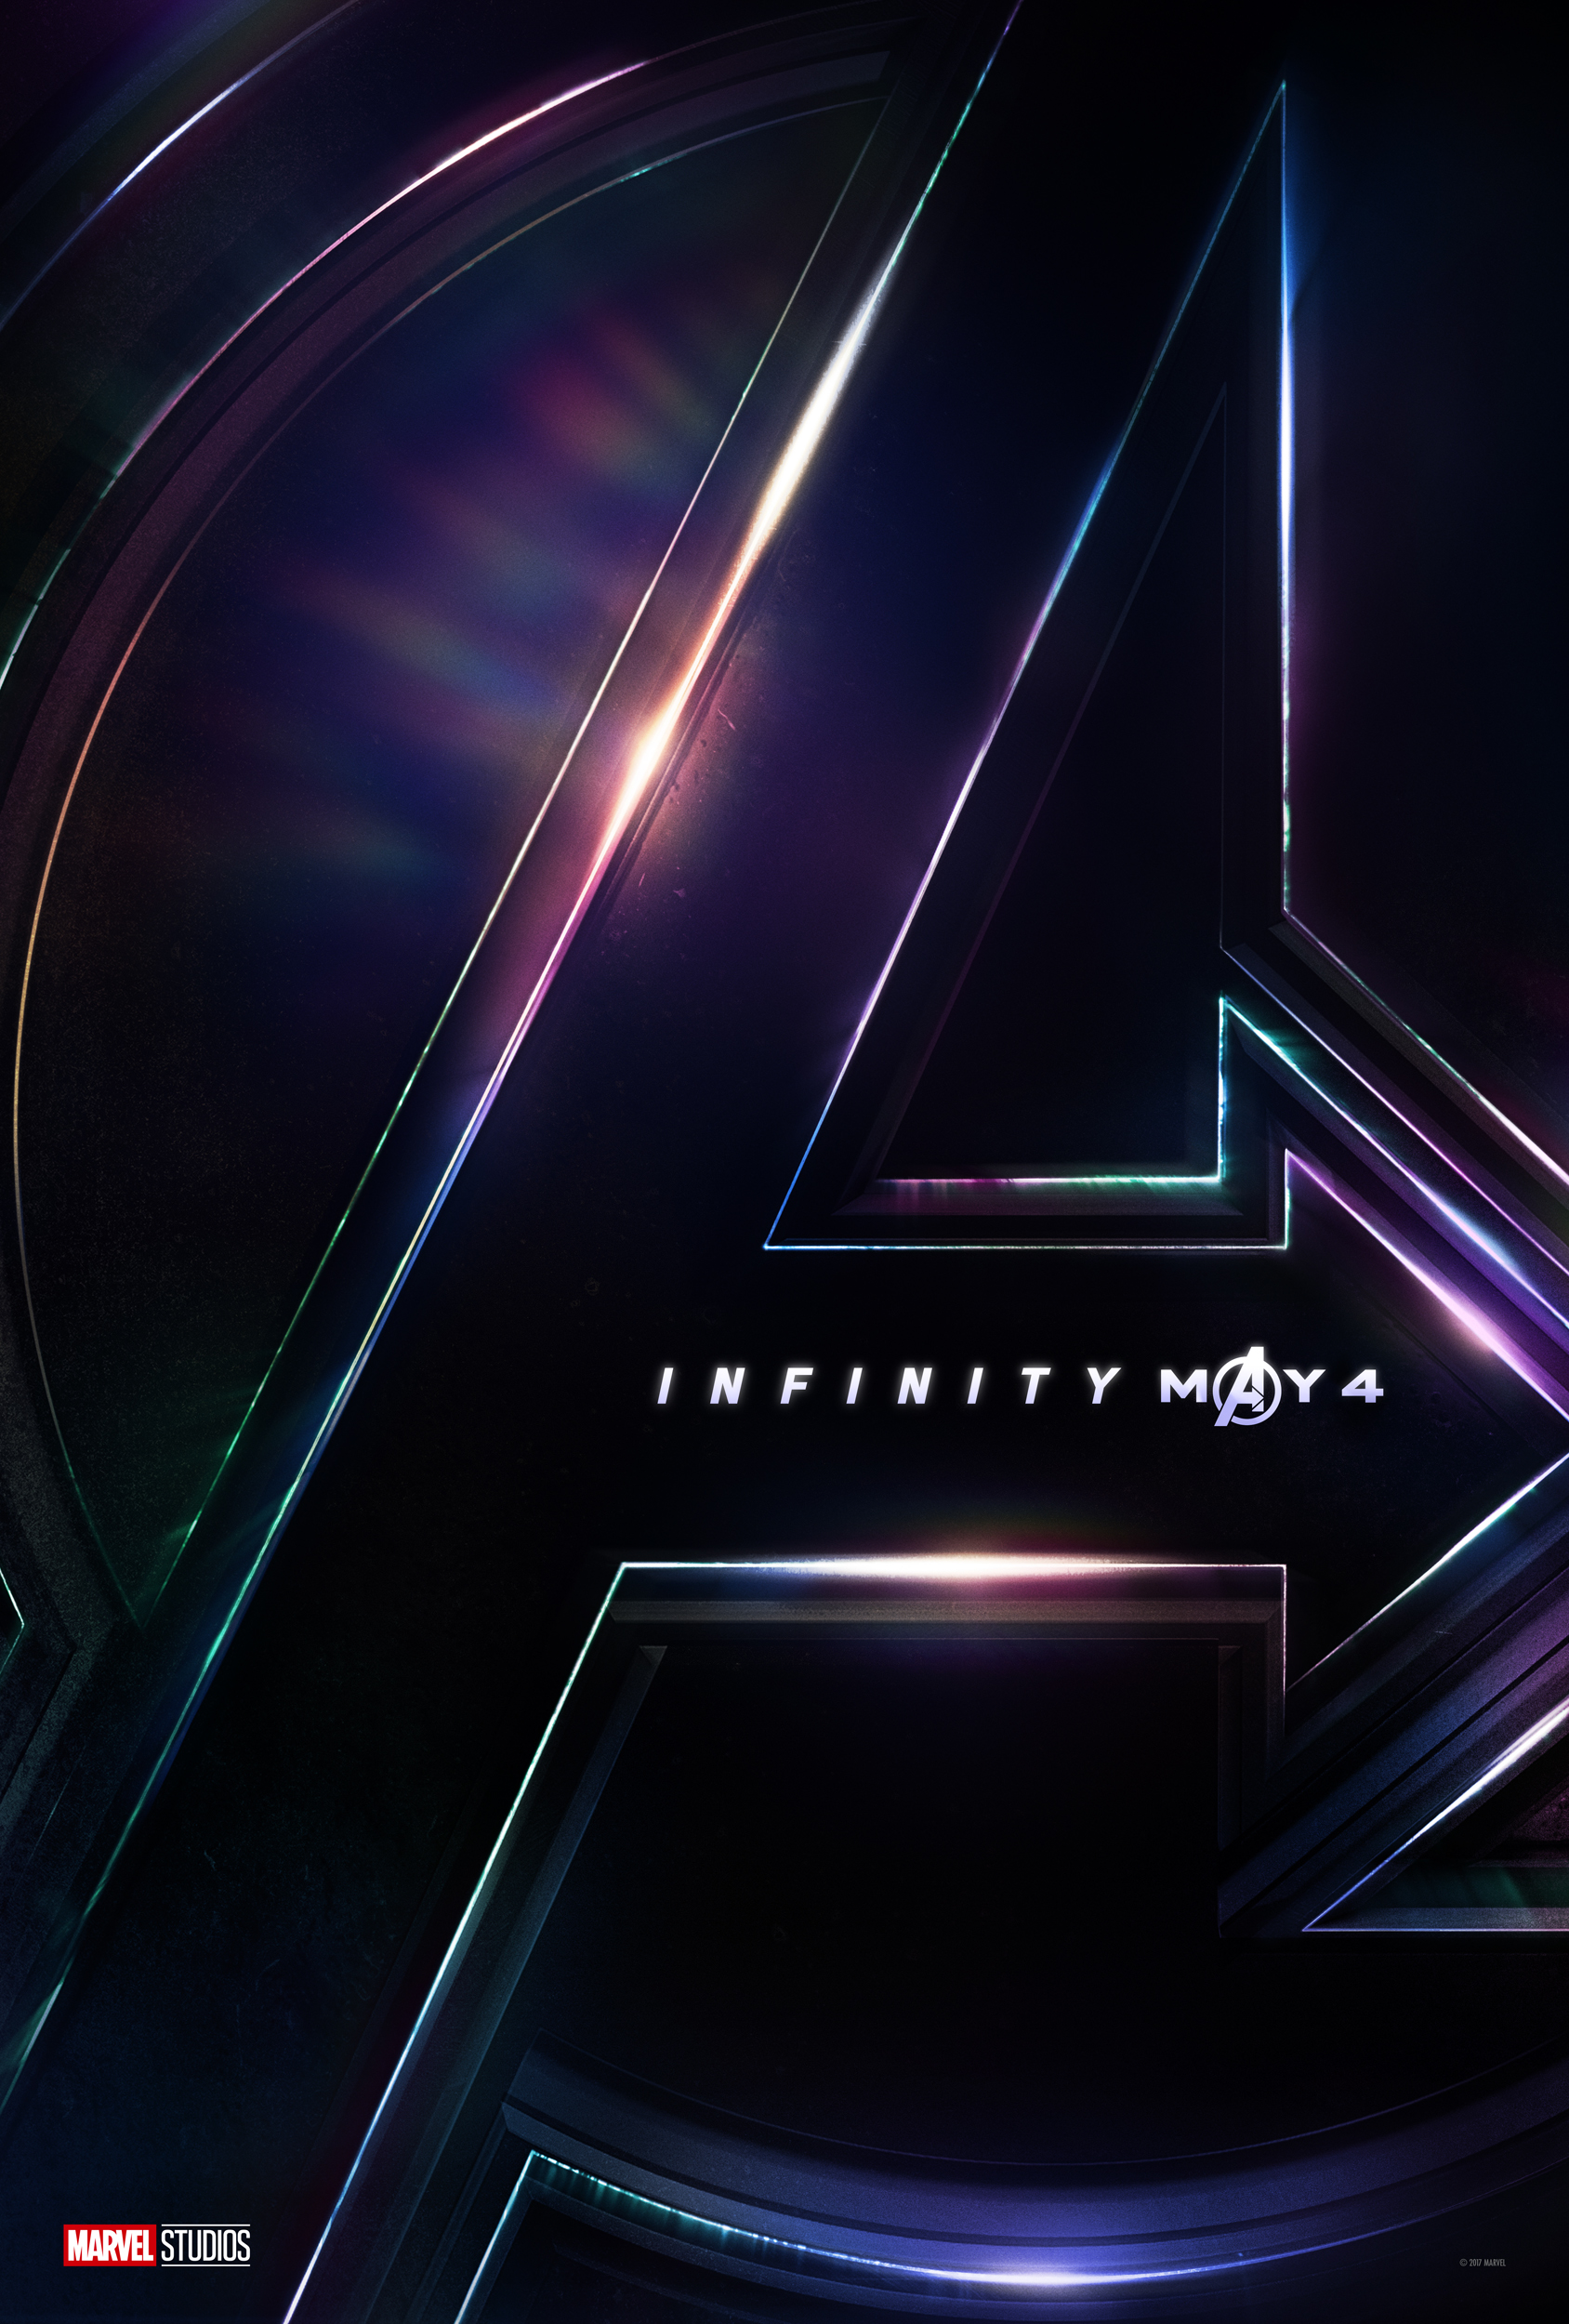 watch avenger infinity war movie